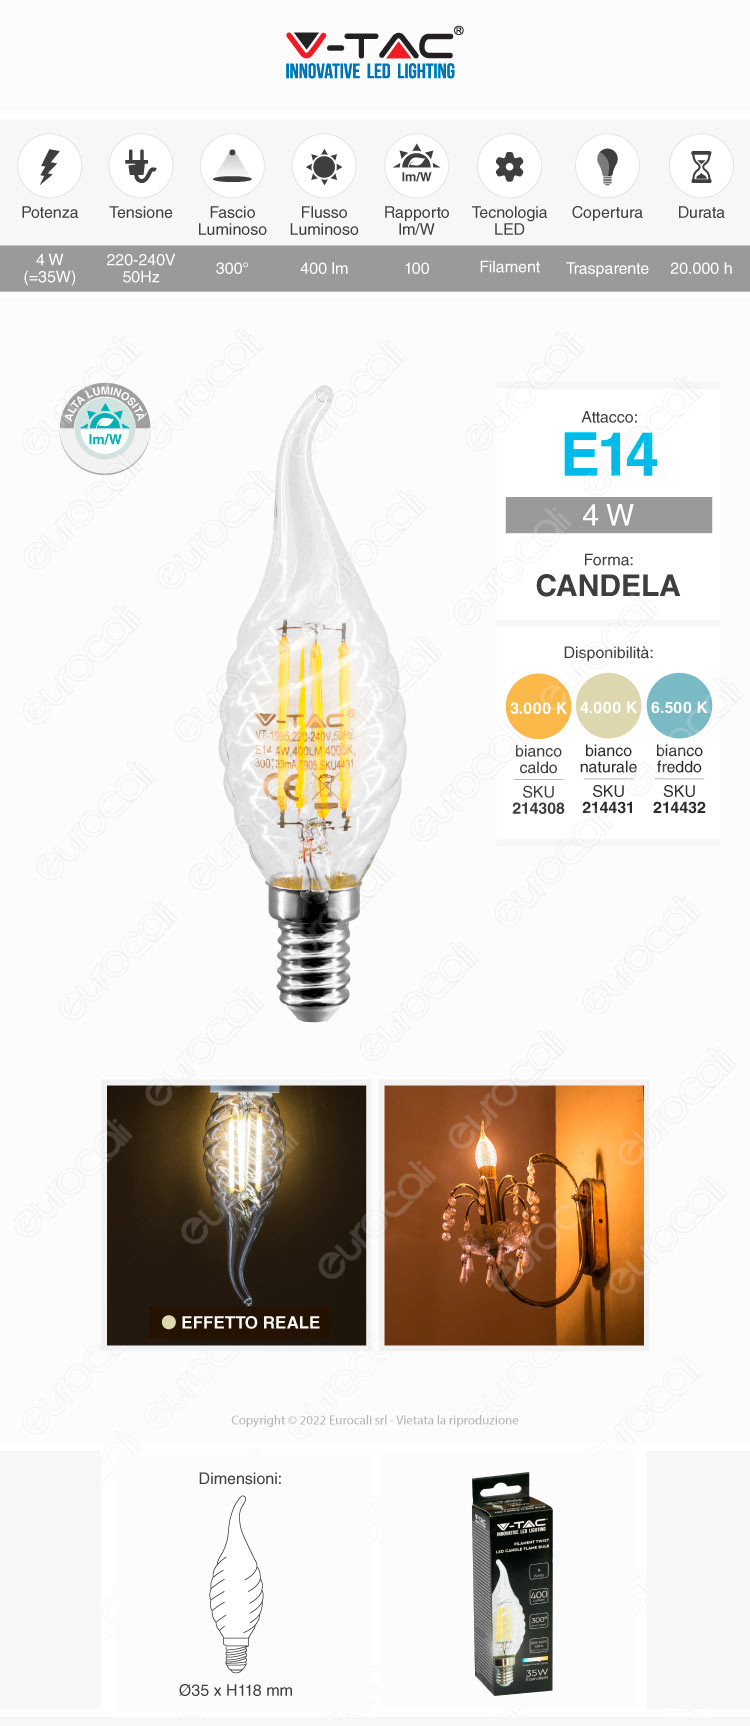 v-tac vt-1995 lampadina led e14 4w candle flame bulb c35 twist filament transparent glass